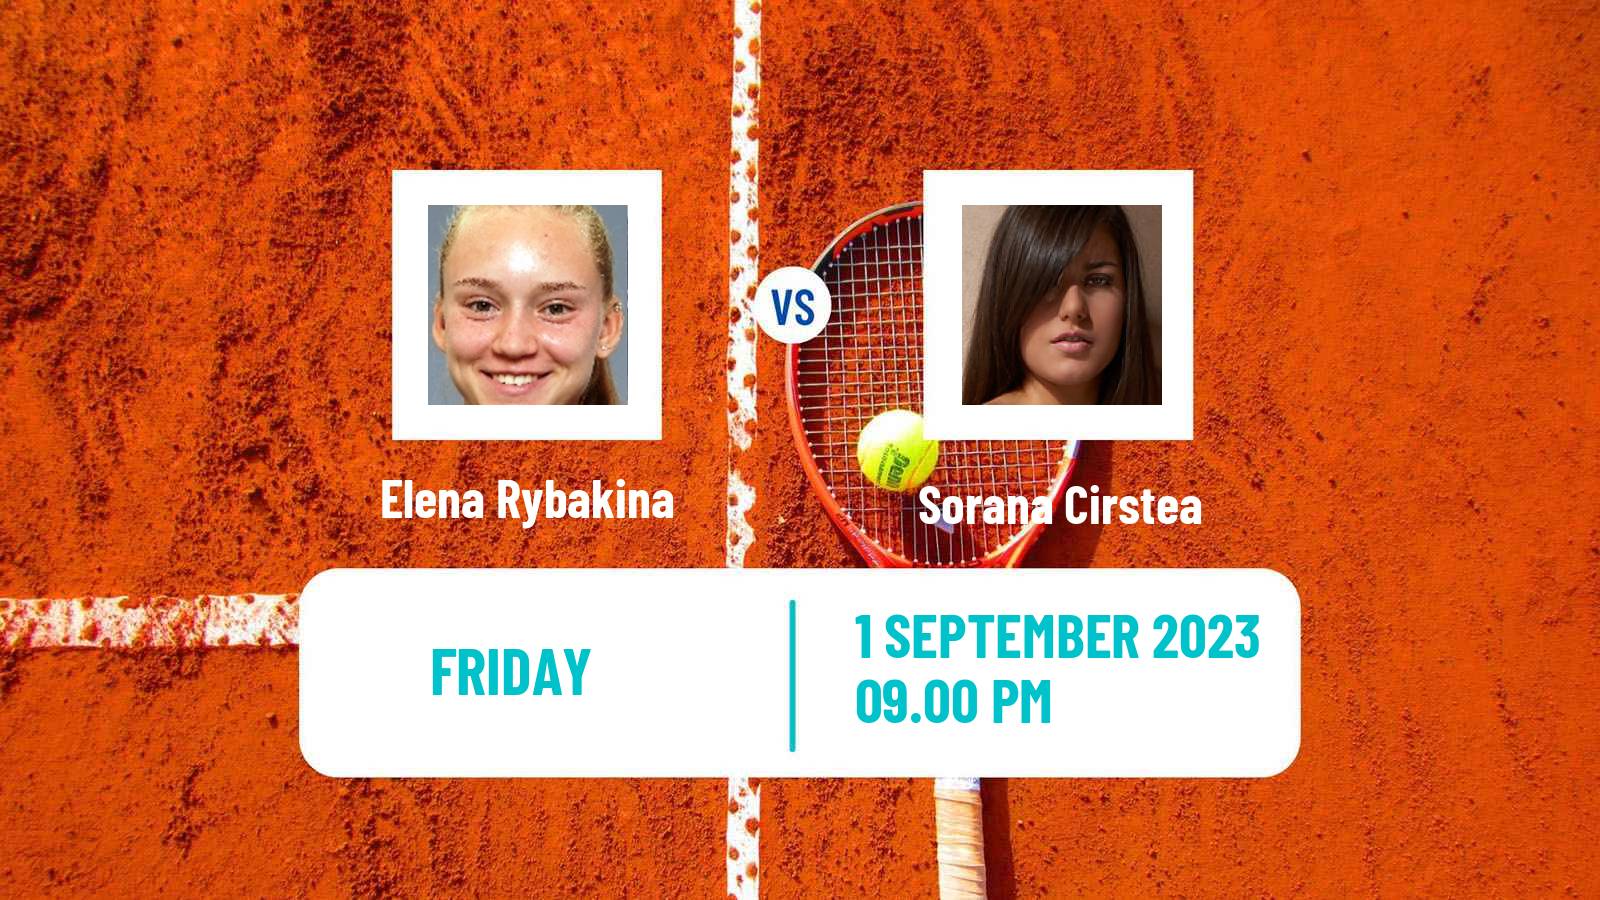 Tennis WTA US Open Elena Rybakina - Sorana Cirstea